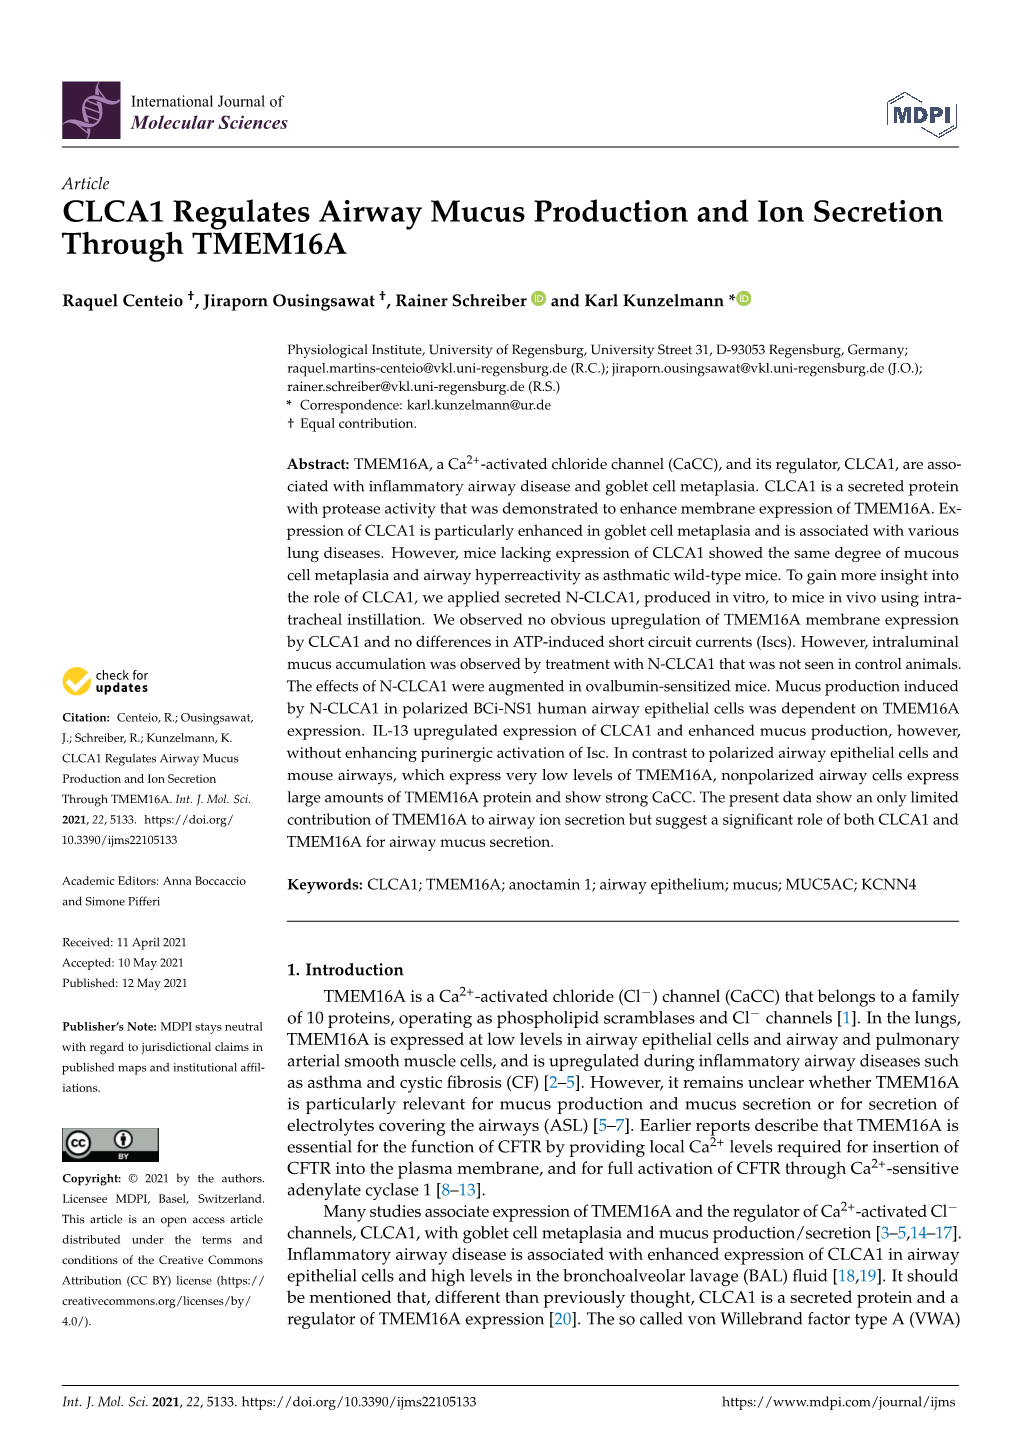 CLCA1 Regulates Airway Mucus Production and Ion Secretion Through TMEM16A